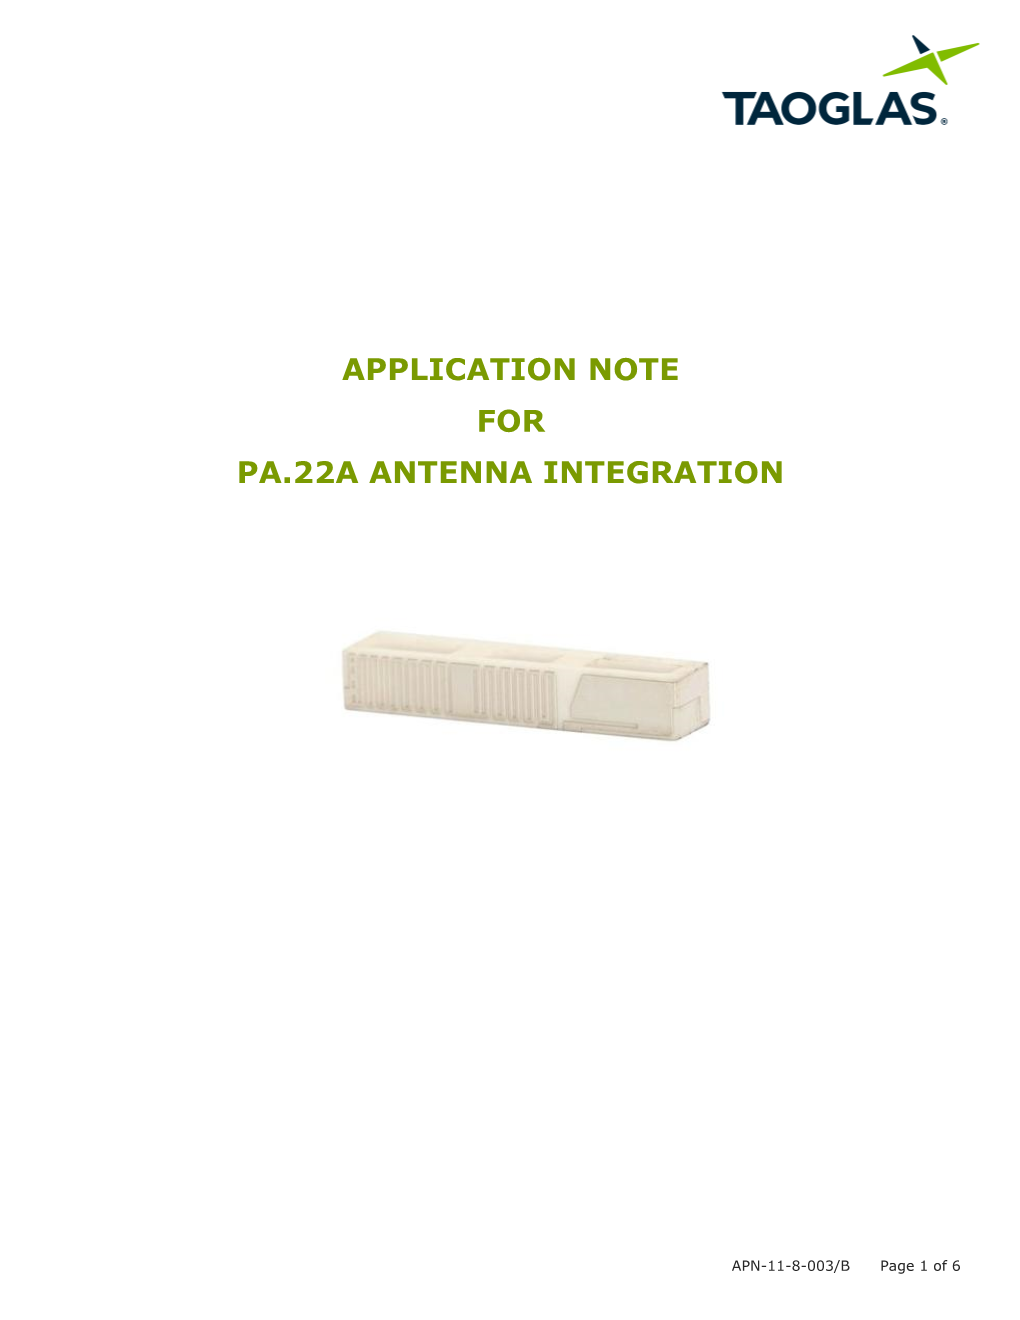 PA.22A Application Note